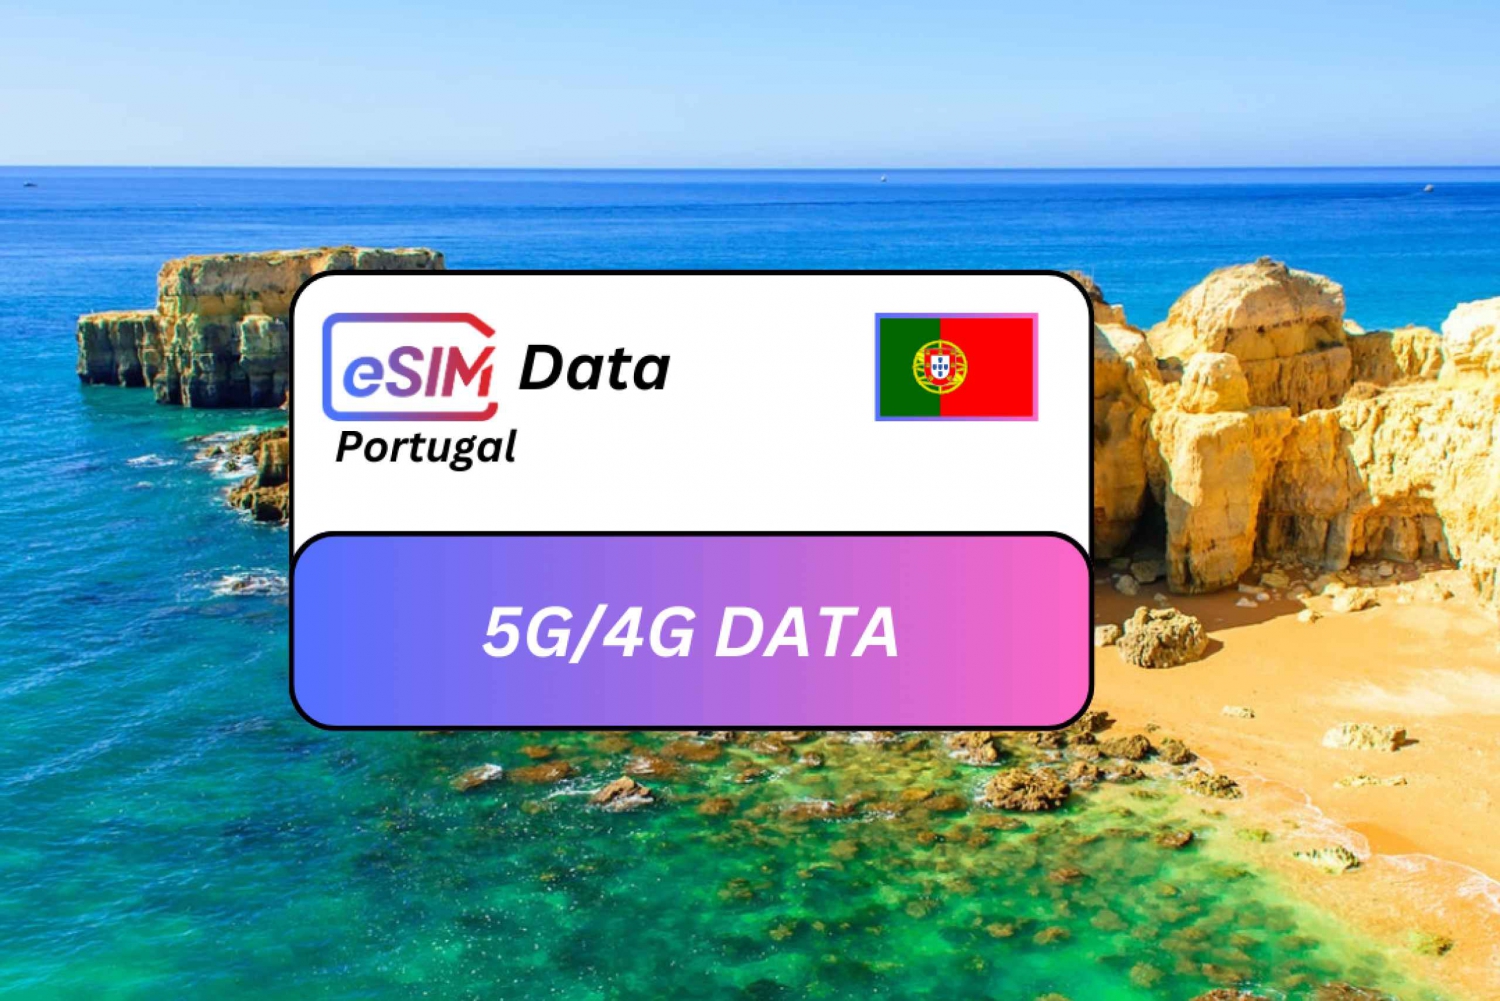 From Albufeira: Portugal eSIM Tourist Data Plan